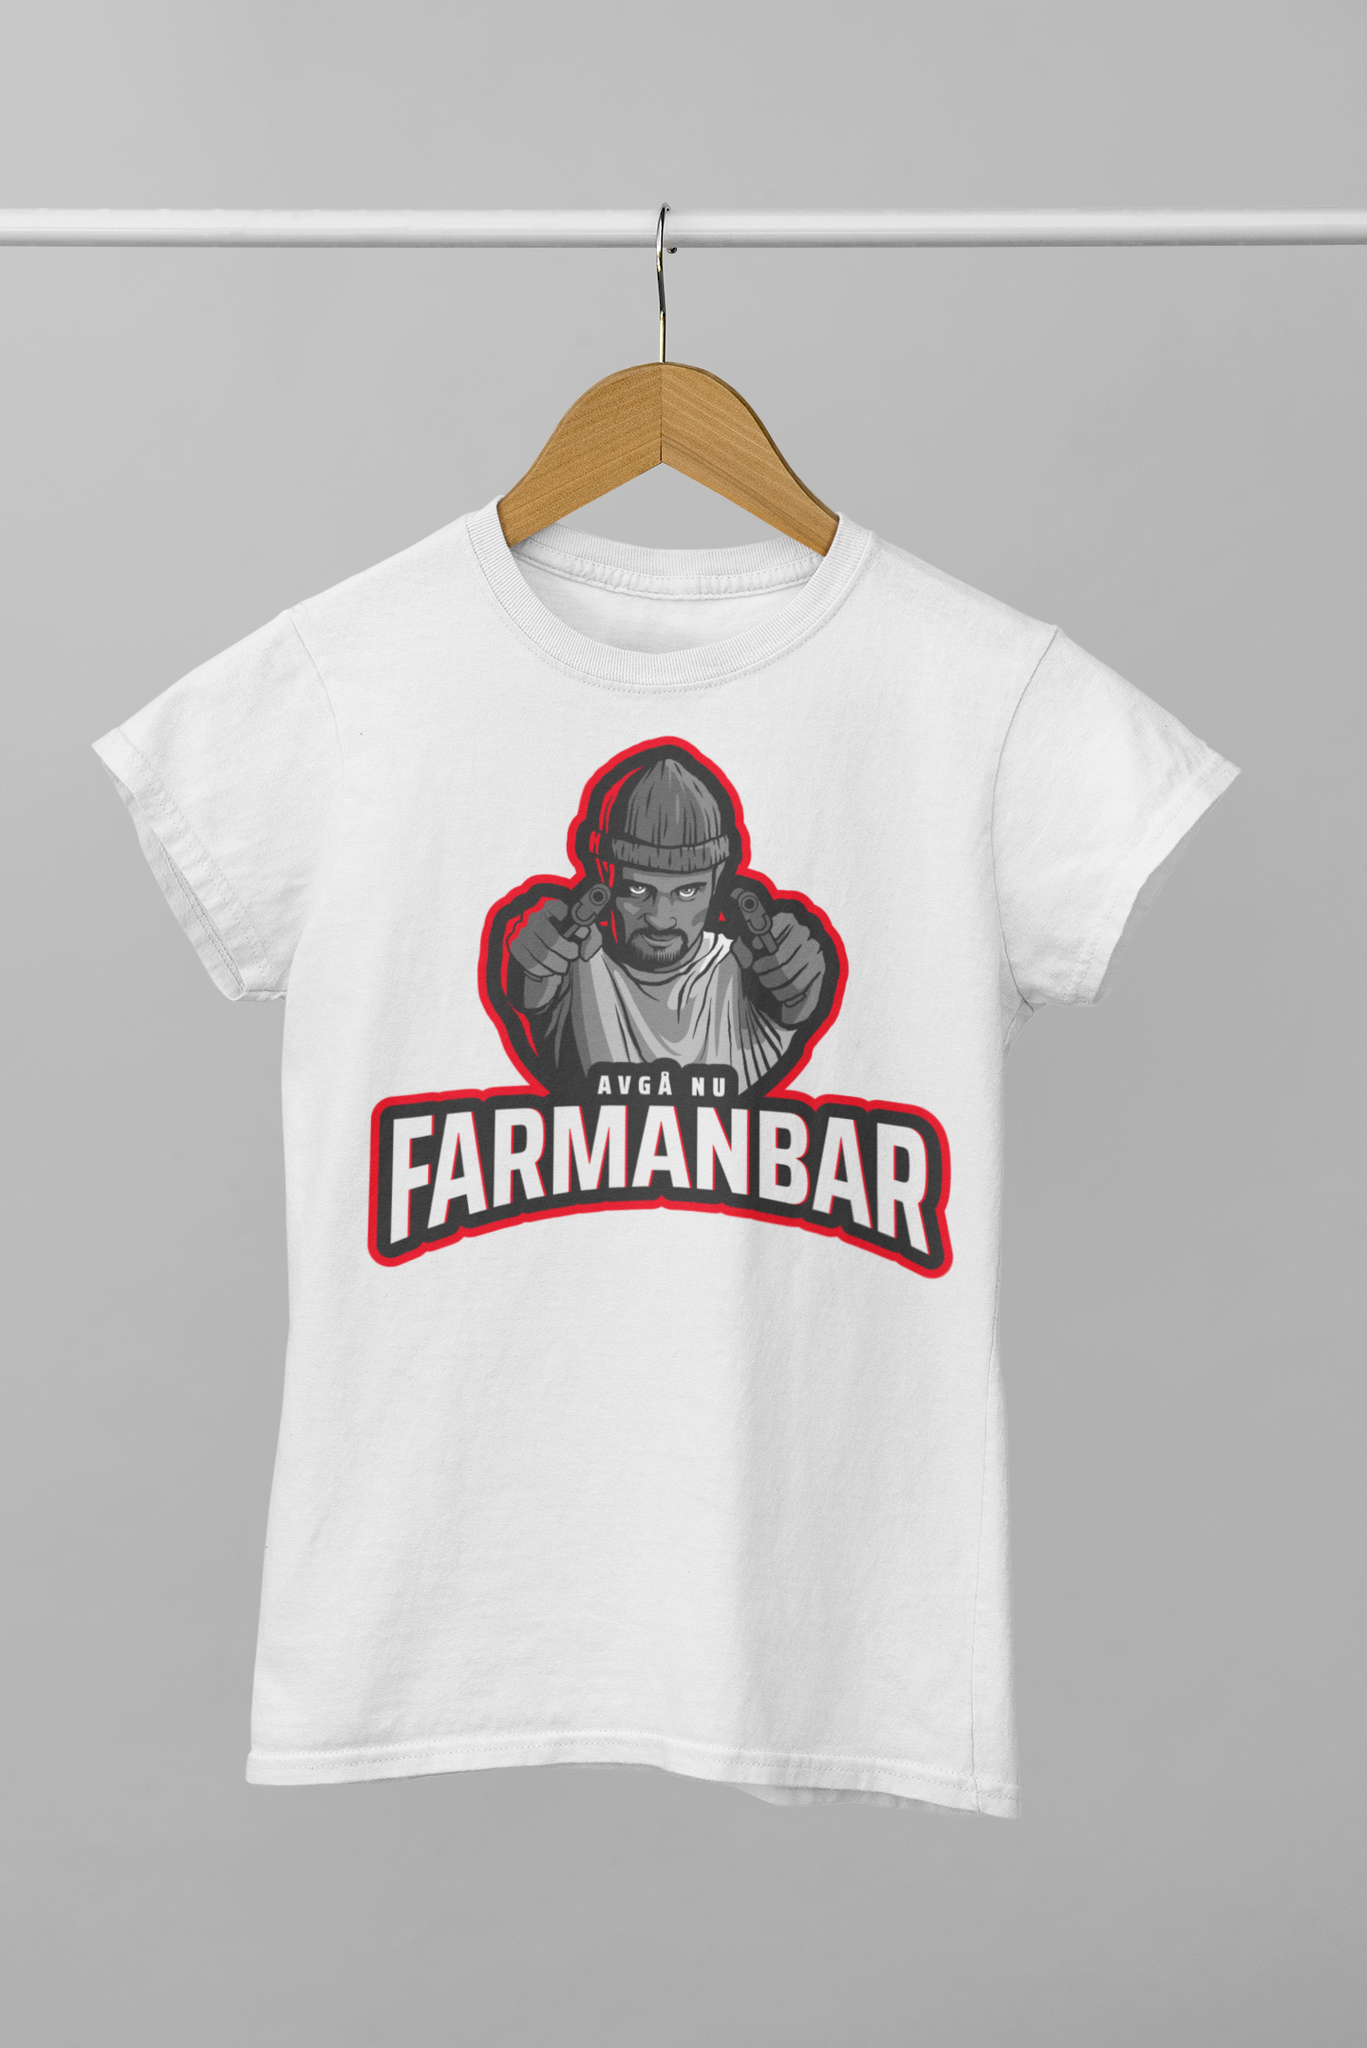 Resign Now Farmanbar (Swedish T-Shirt Men